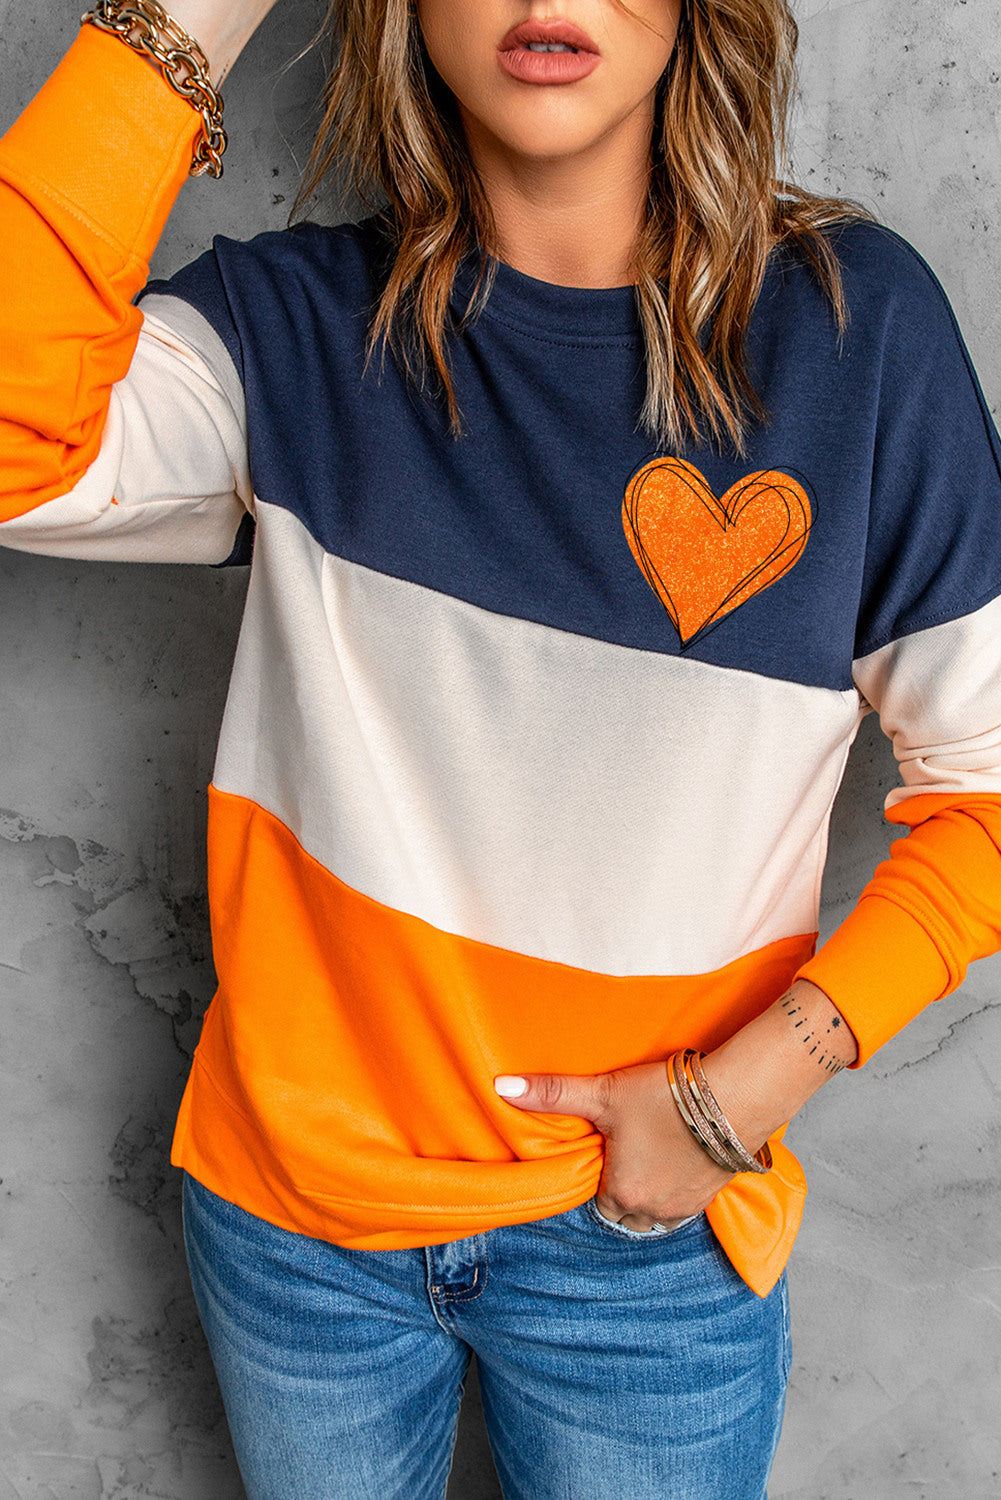 LC25312715-14-S, LC25312715-14-M, LC25312715-14-L, LC25312715-14-XL, LC25312715-14-2XL, Orange Woman's Striped Contrast Stitching Sweatshirt